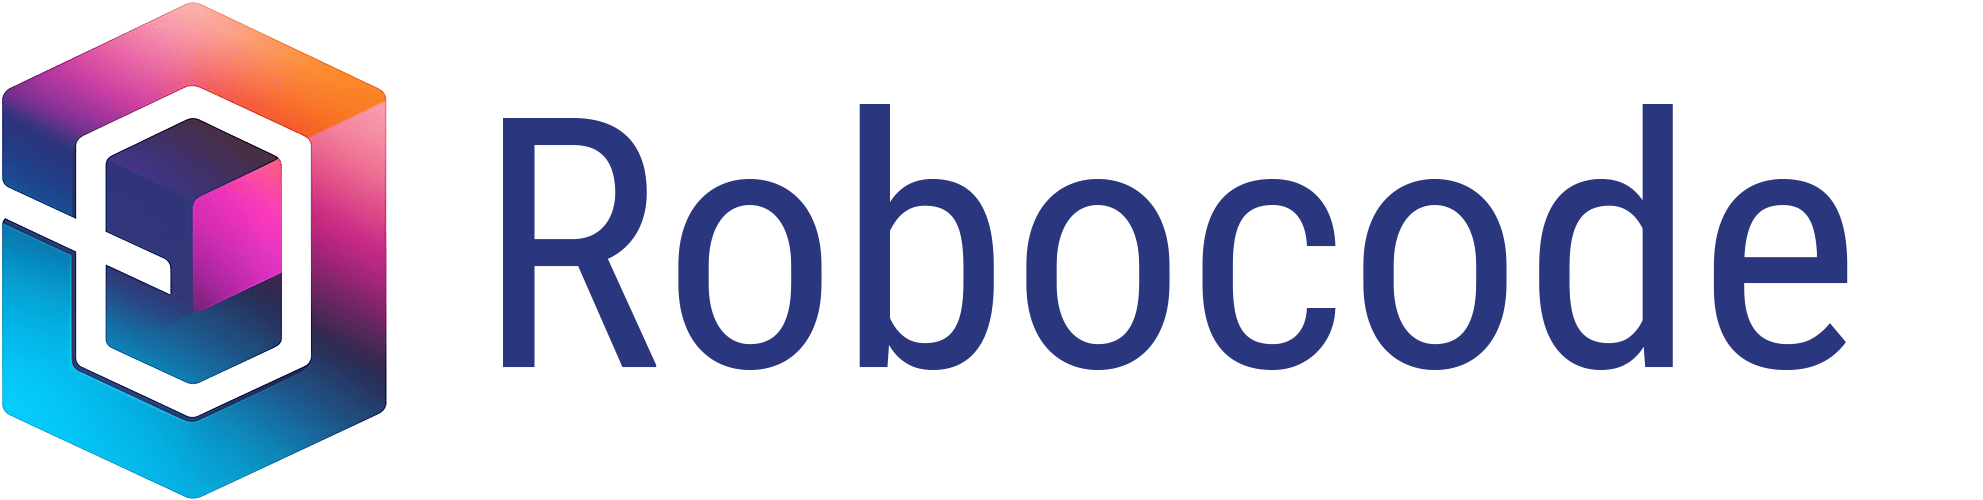 Robocode website management and creation